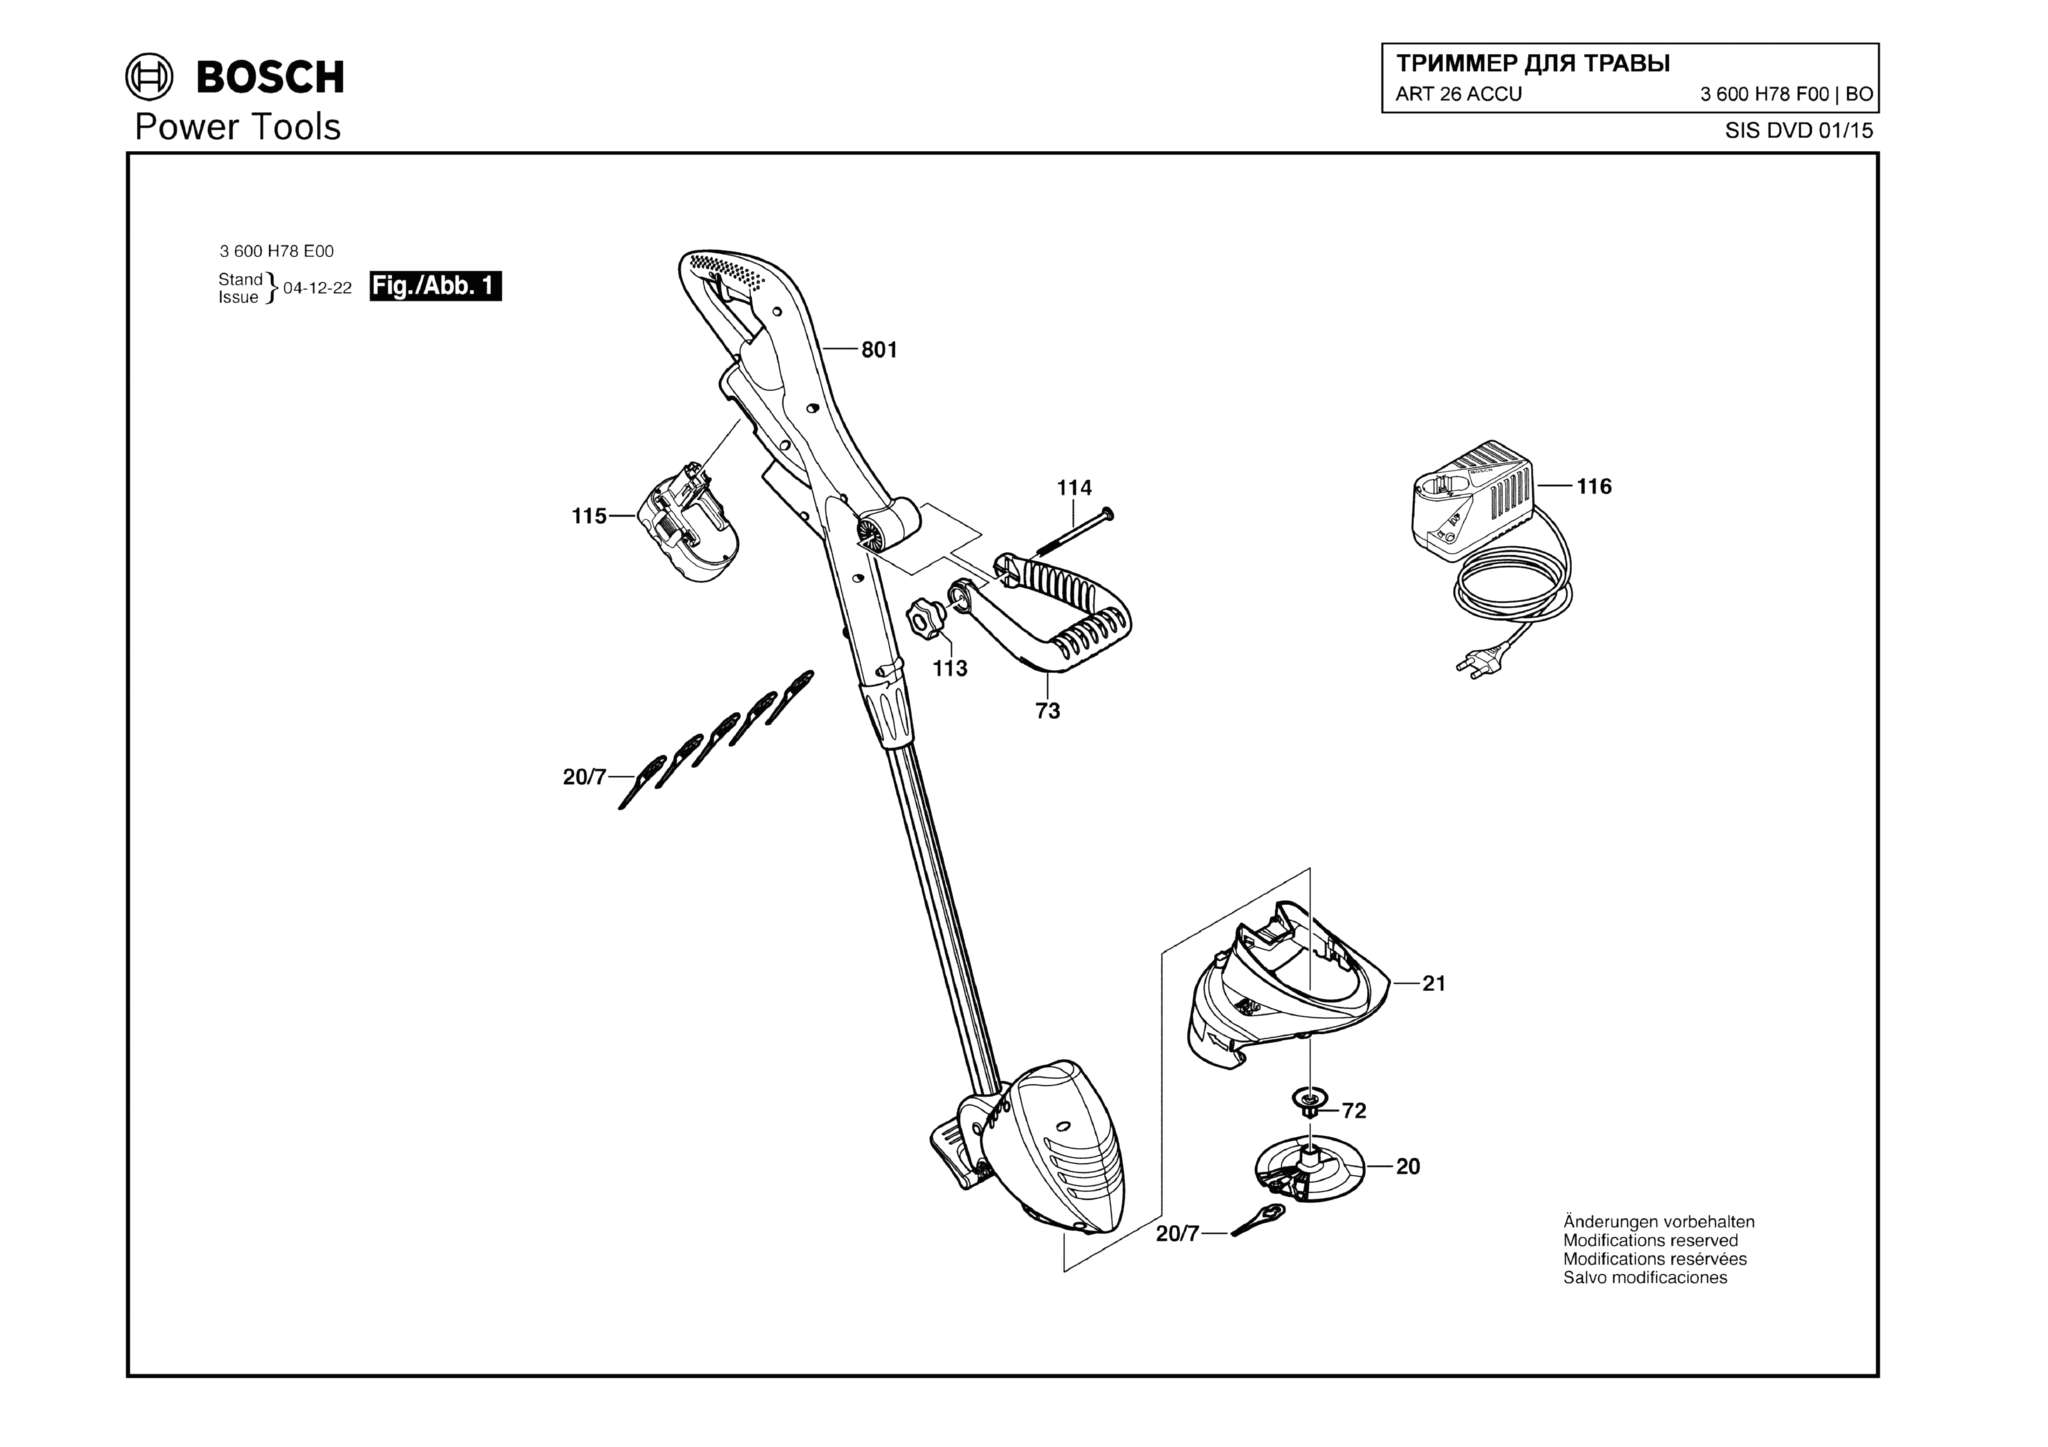 Запчасти, схема и деталировка Bosch ART 26 ACCU (ТИП 3600H78F00)